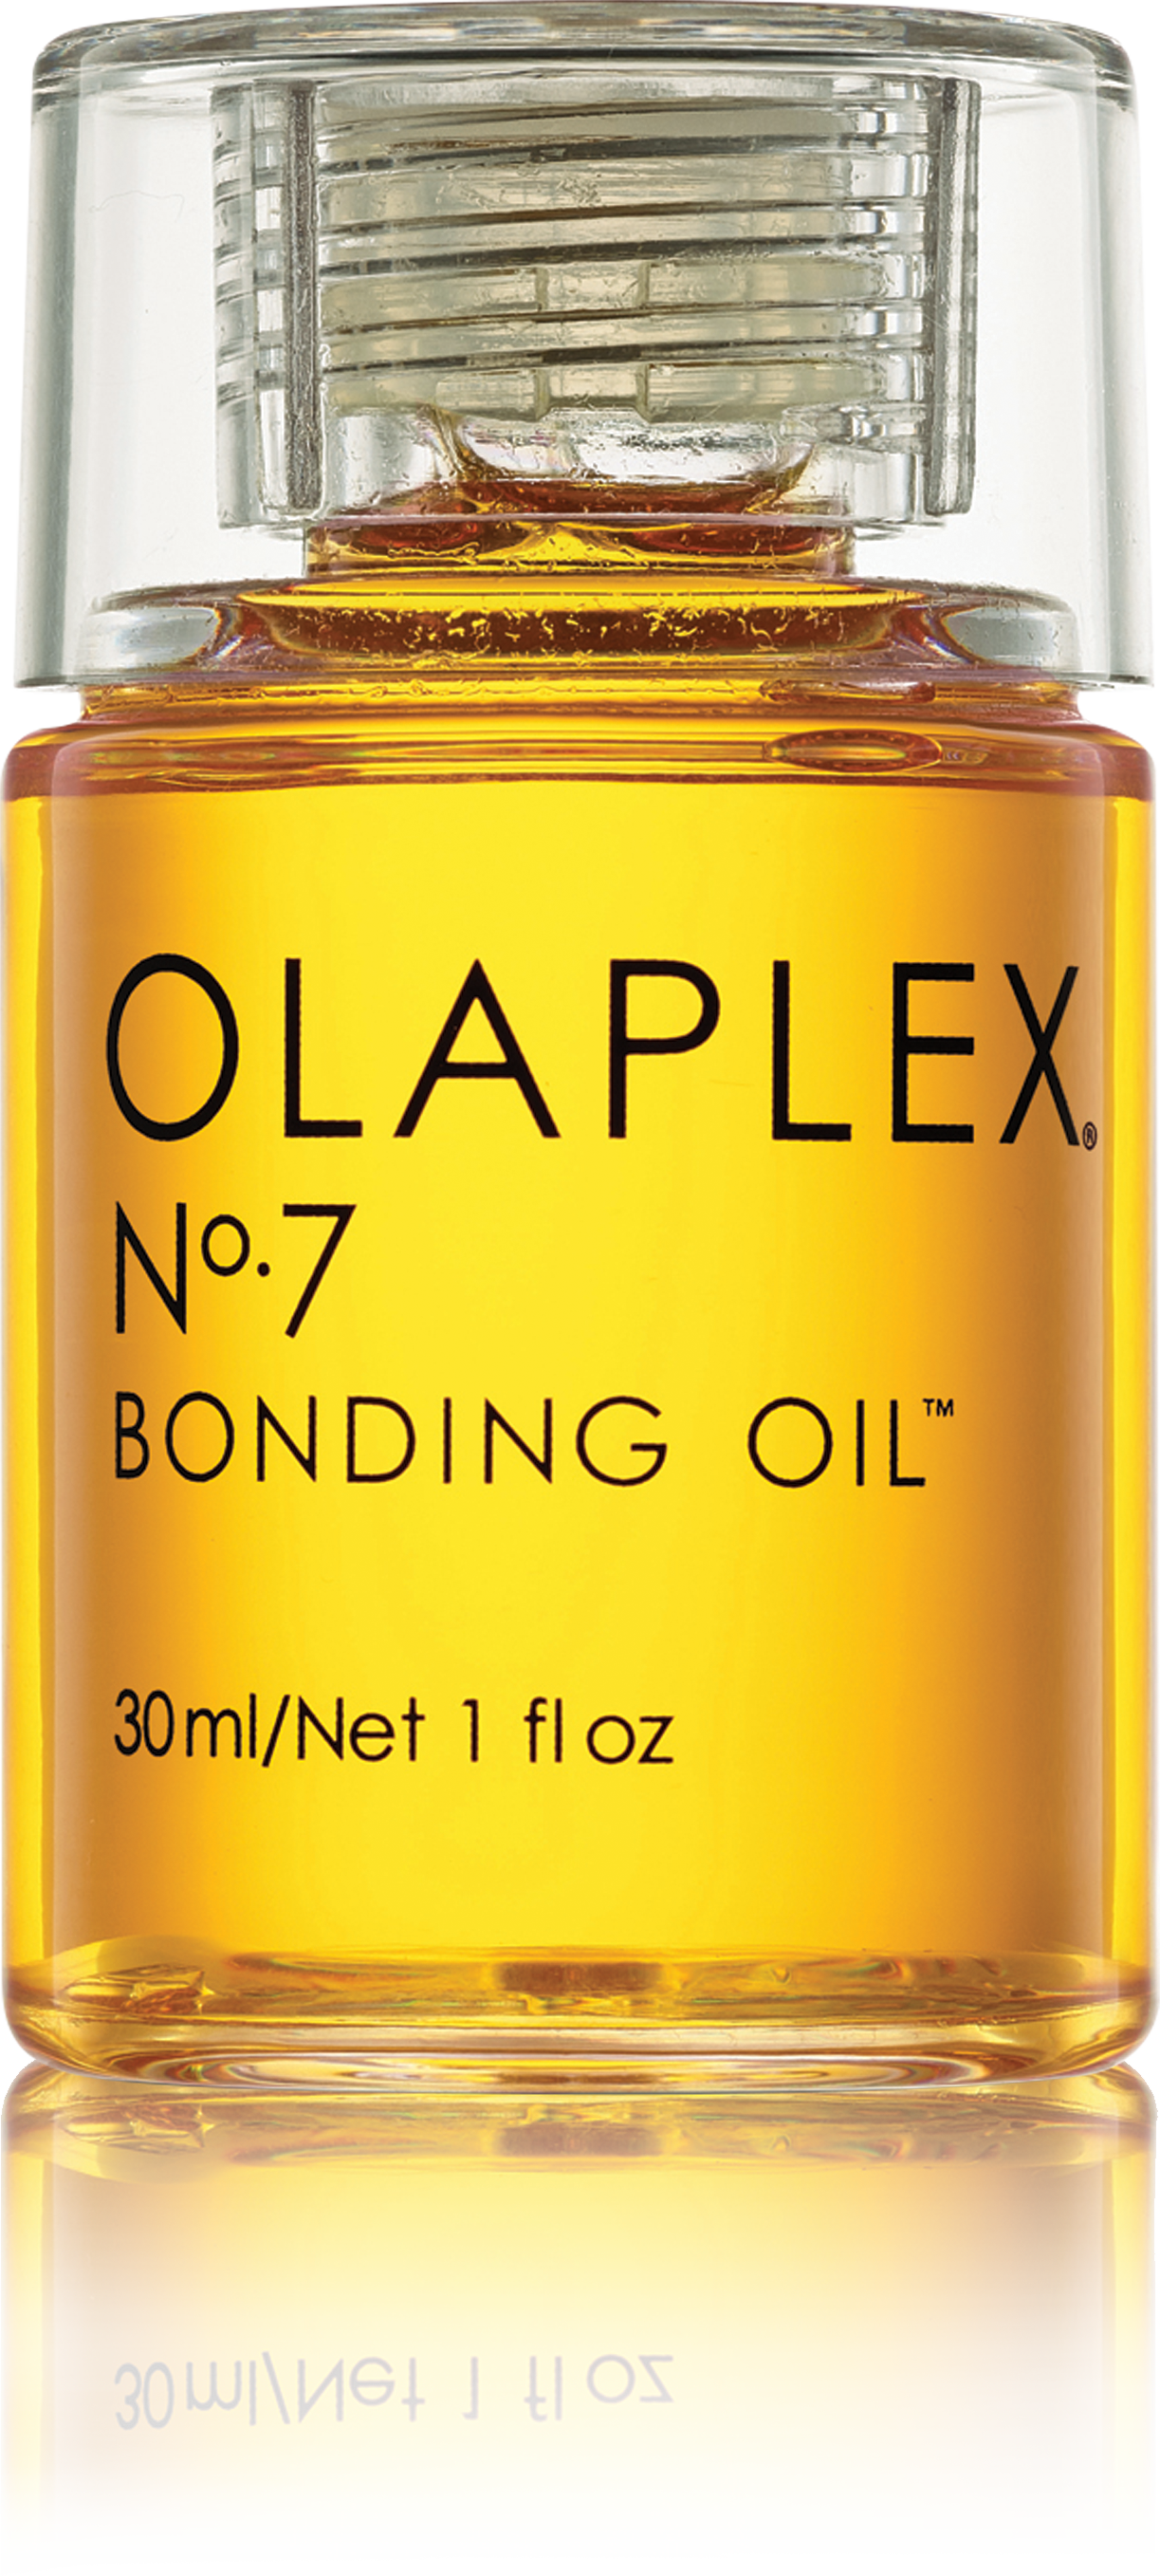 Olaplex No.7 Bonding 30ml $54.00 — HUSTLE CO